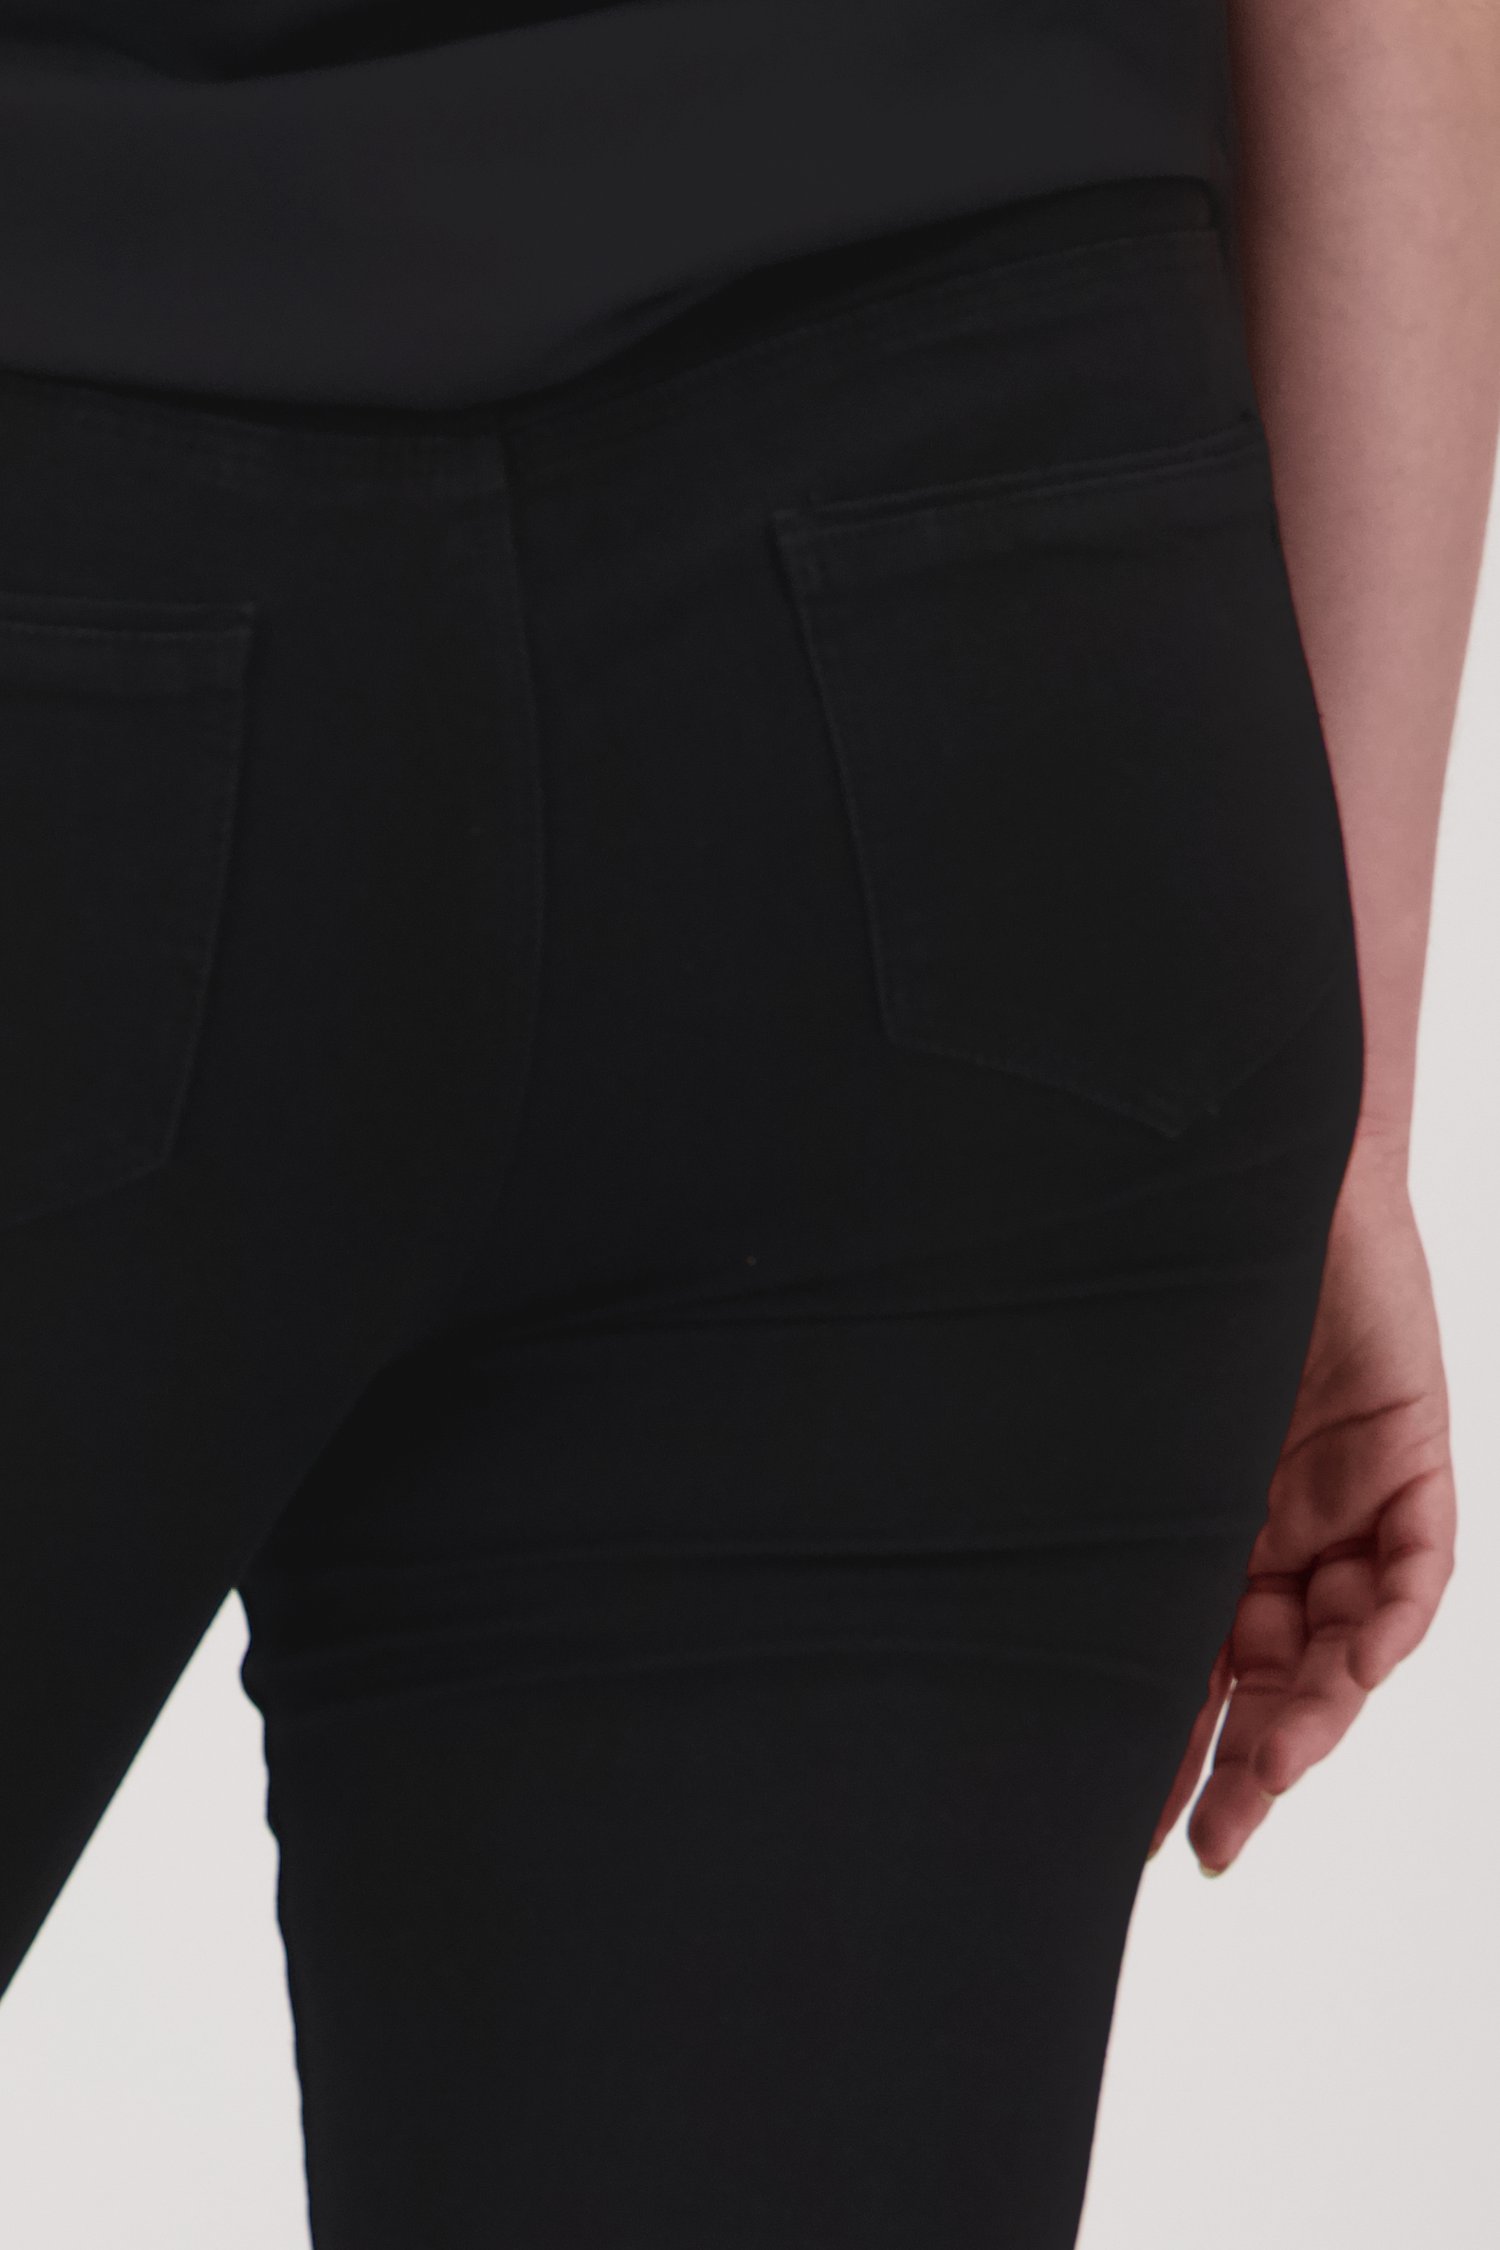 Zwarte jeans - Bootcut fit  van Only Carmakoma voor Dames